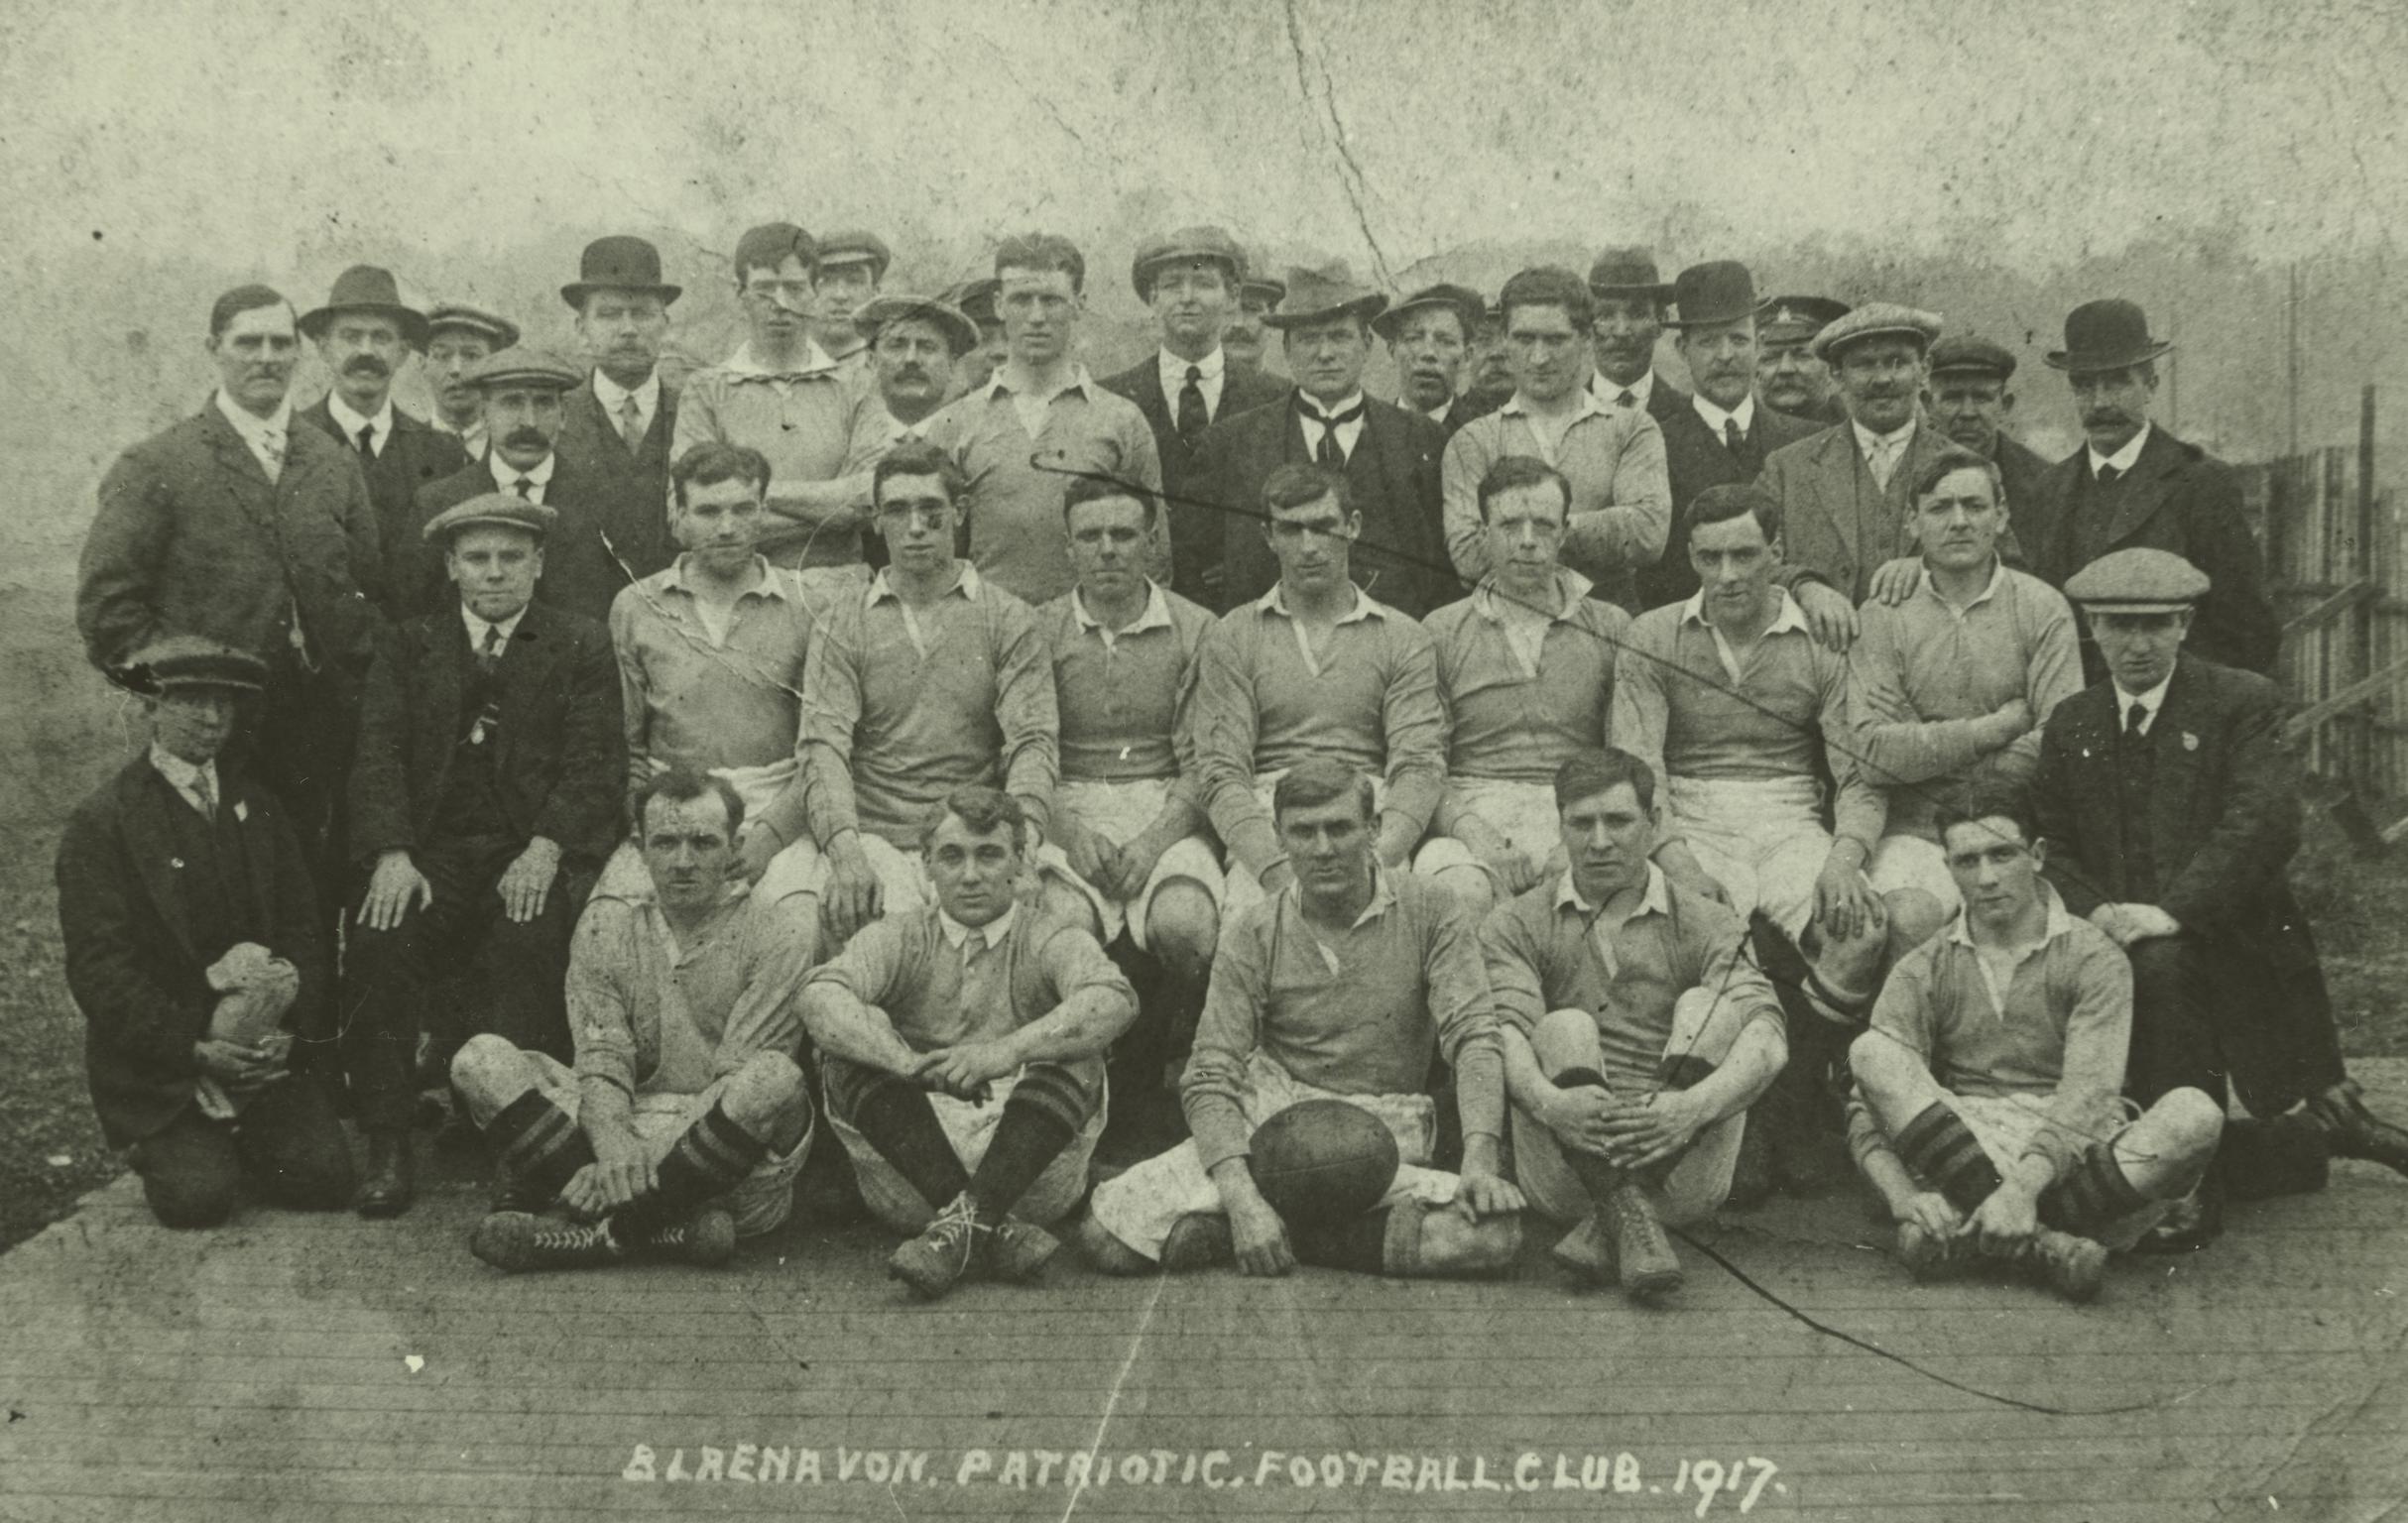 Blaenavon Patriotic Football Club 1917 (photograph)